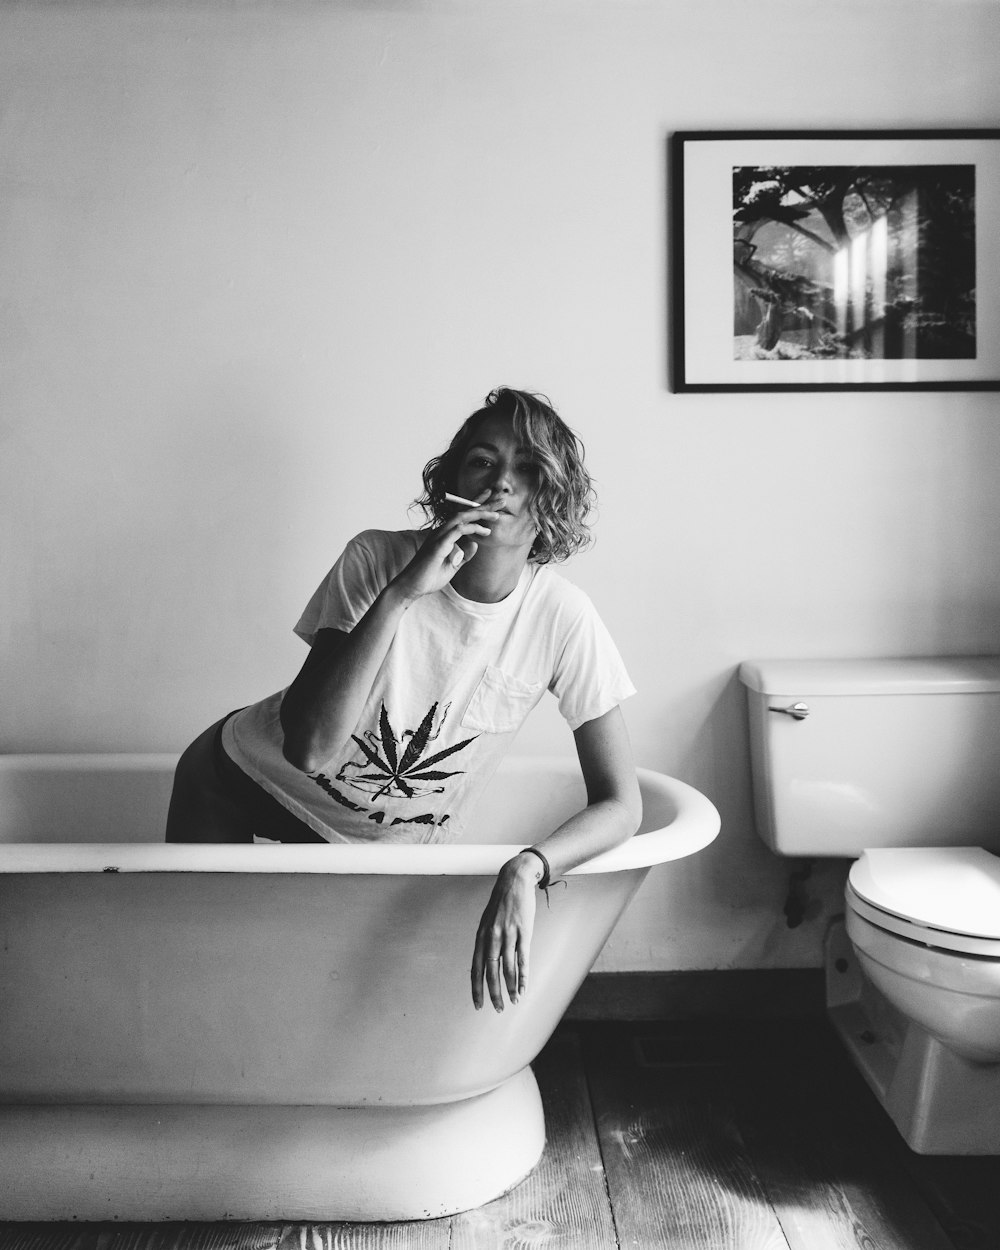 grayscale of woman smoking inside bathtub, best marijuana strains